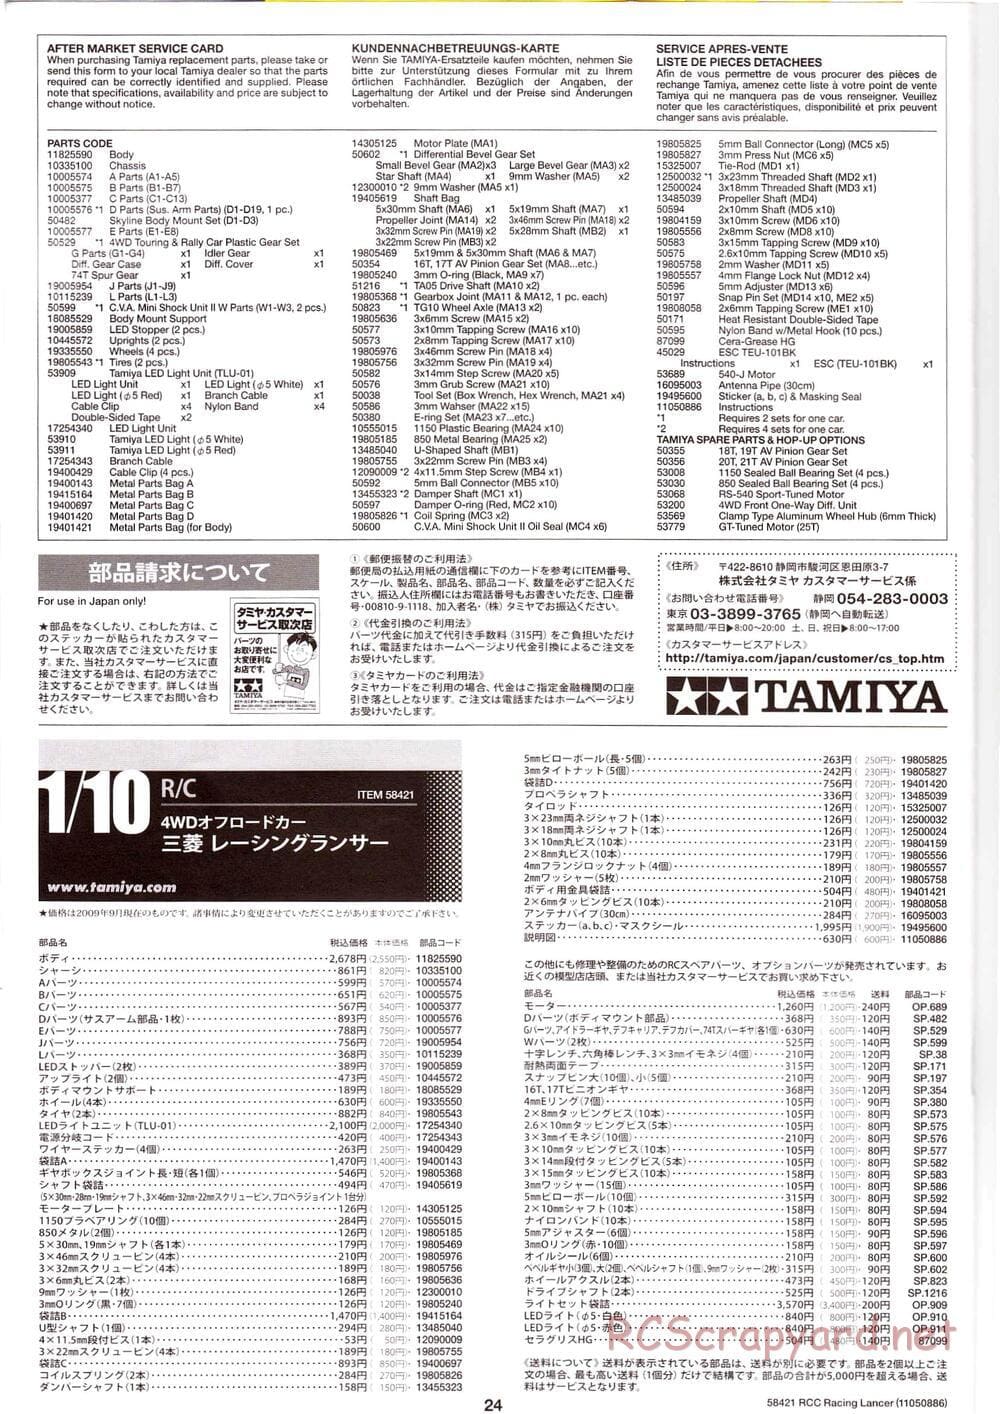 Tamiya - Mitsubishi Racing Lancer - DF-01 Chassis - Manual - Page 24